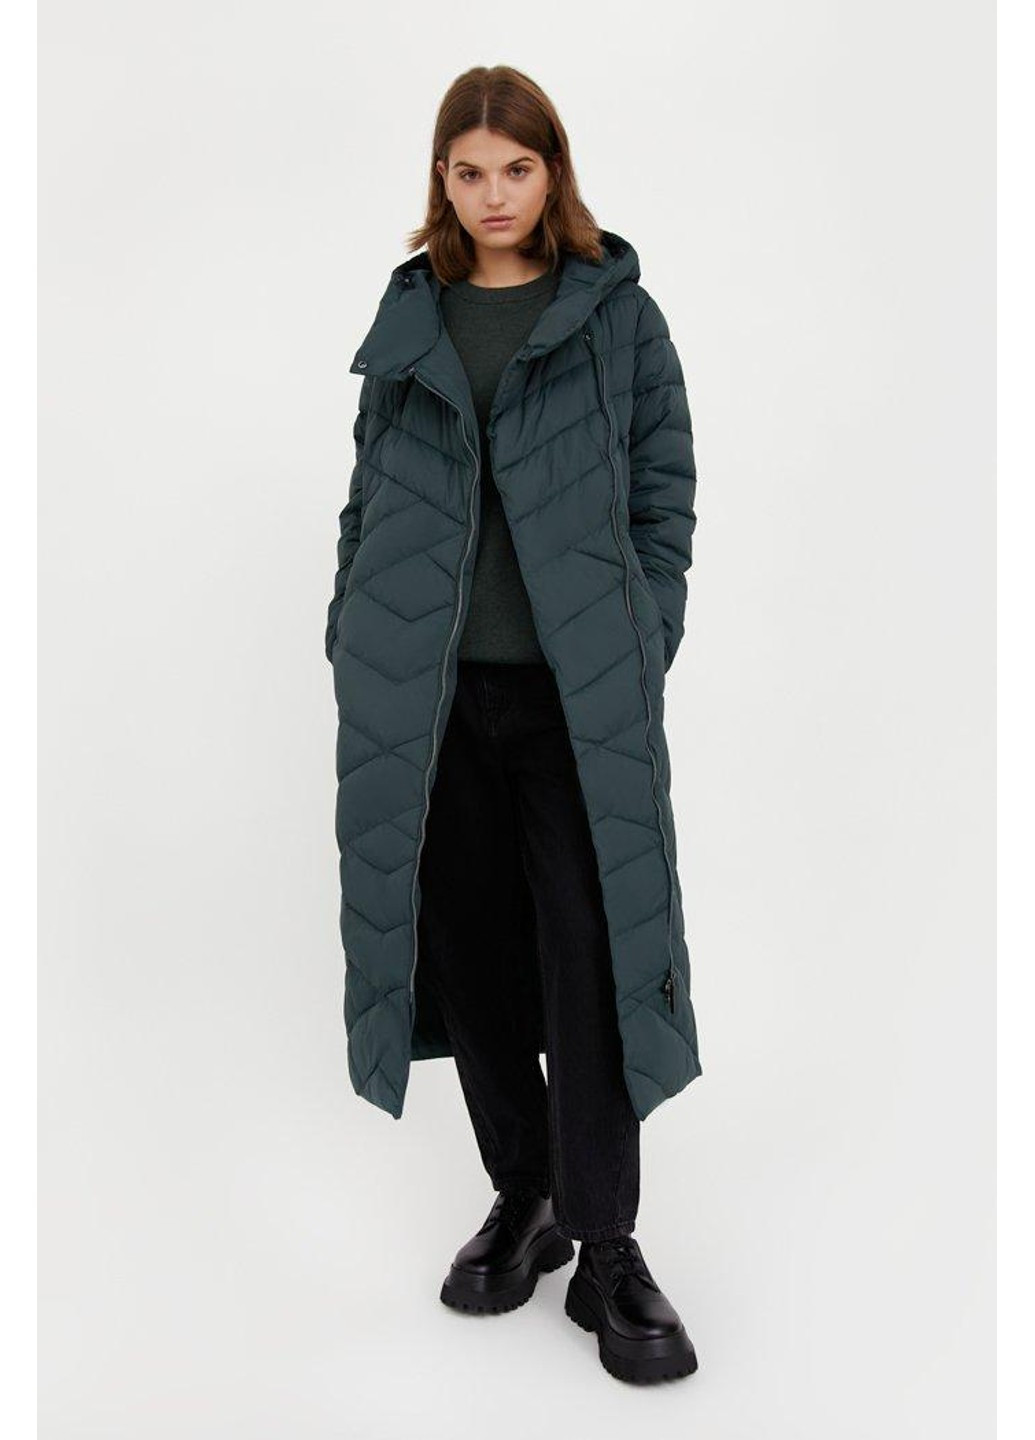 Зеленая зимняя зимняя куртка va20-11009-506 Finn Flare